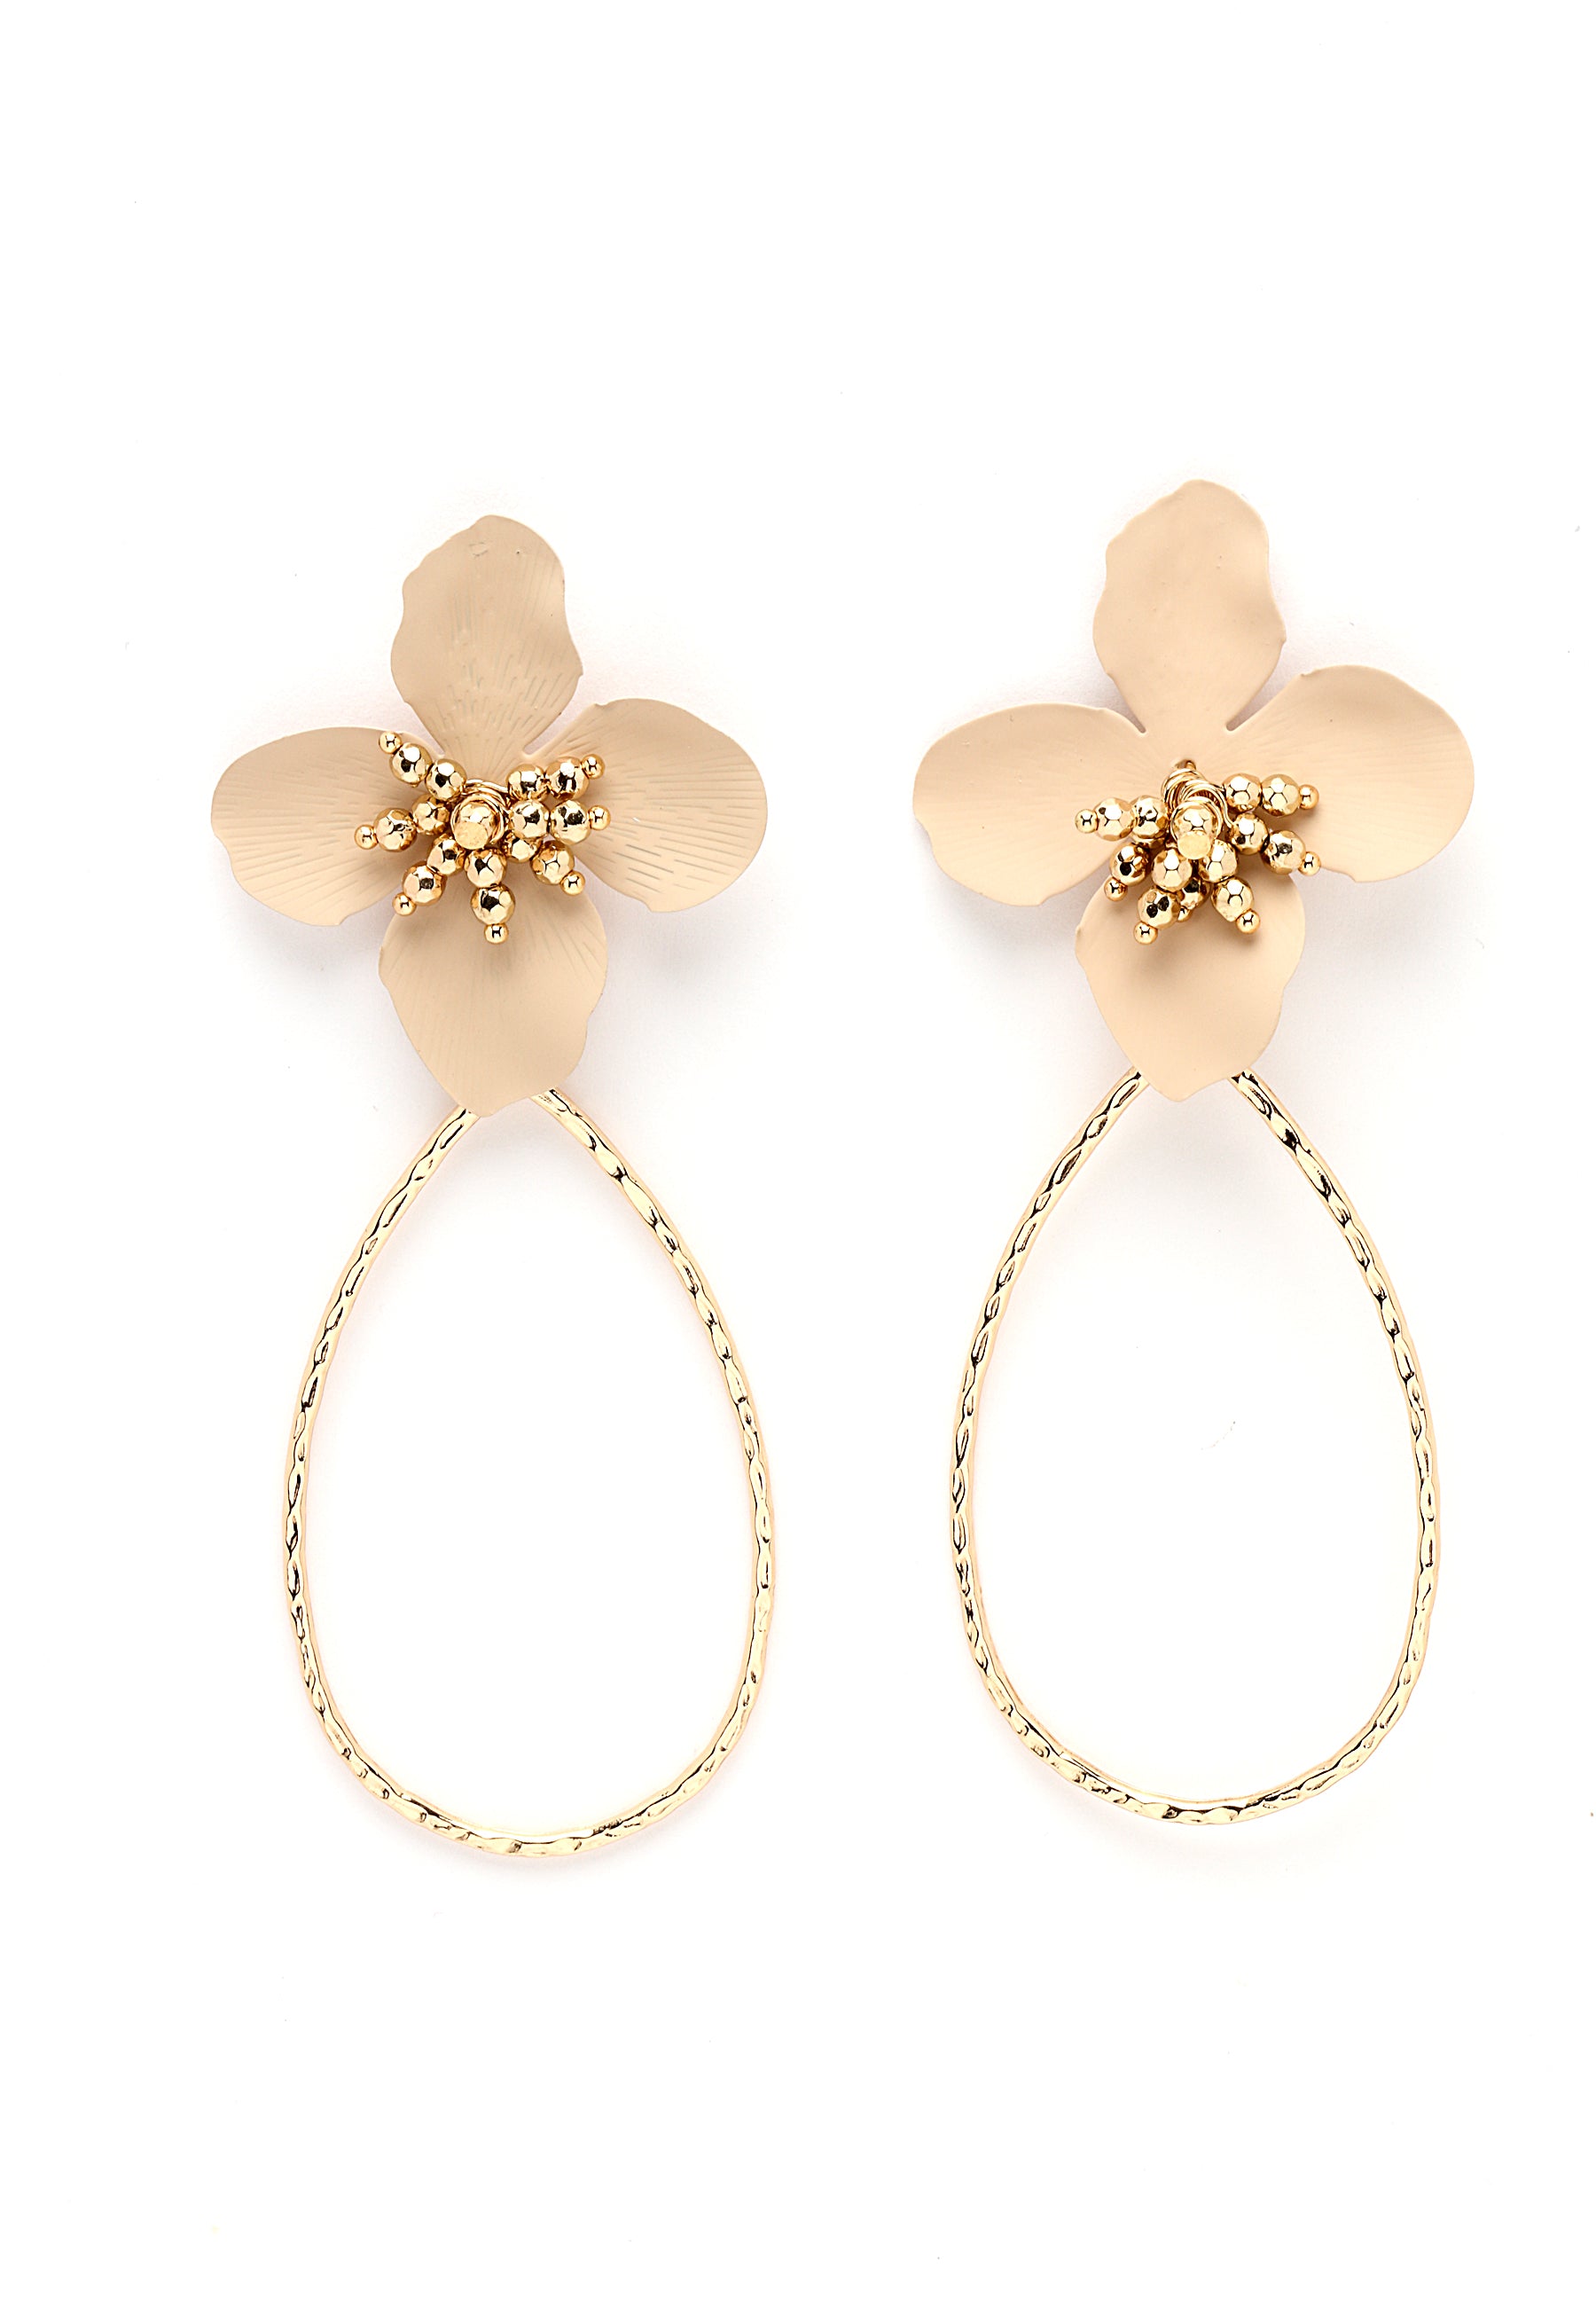 Plum Blossom Earrings in Beige